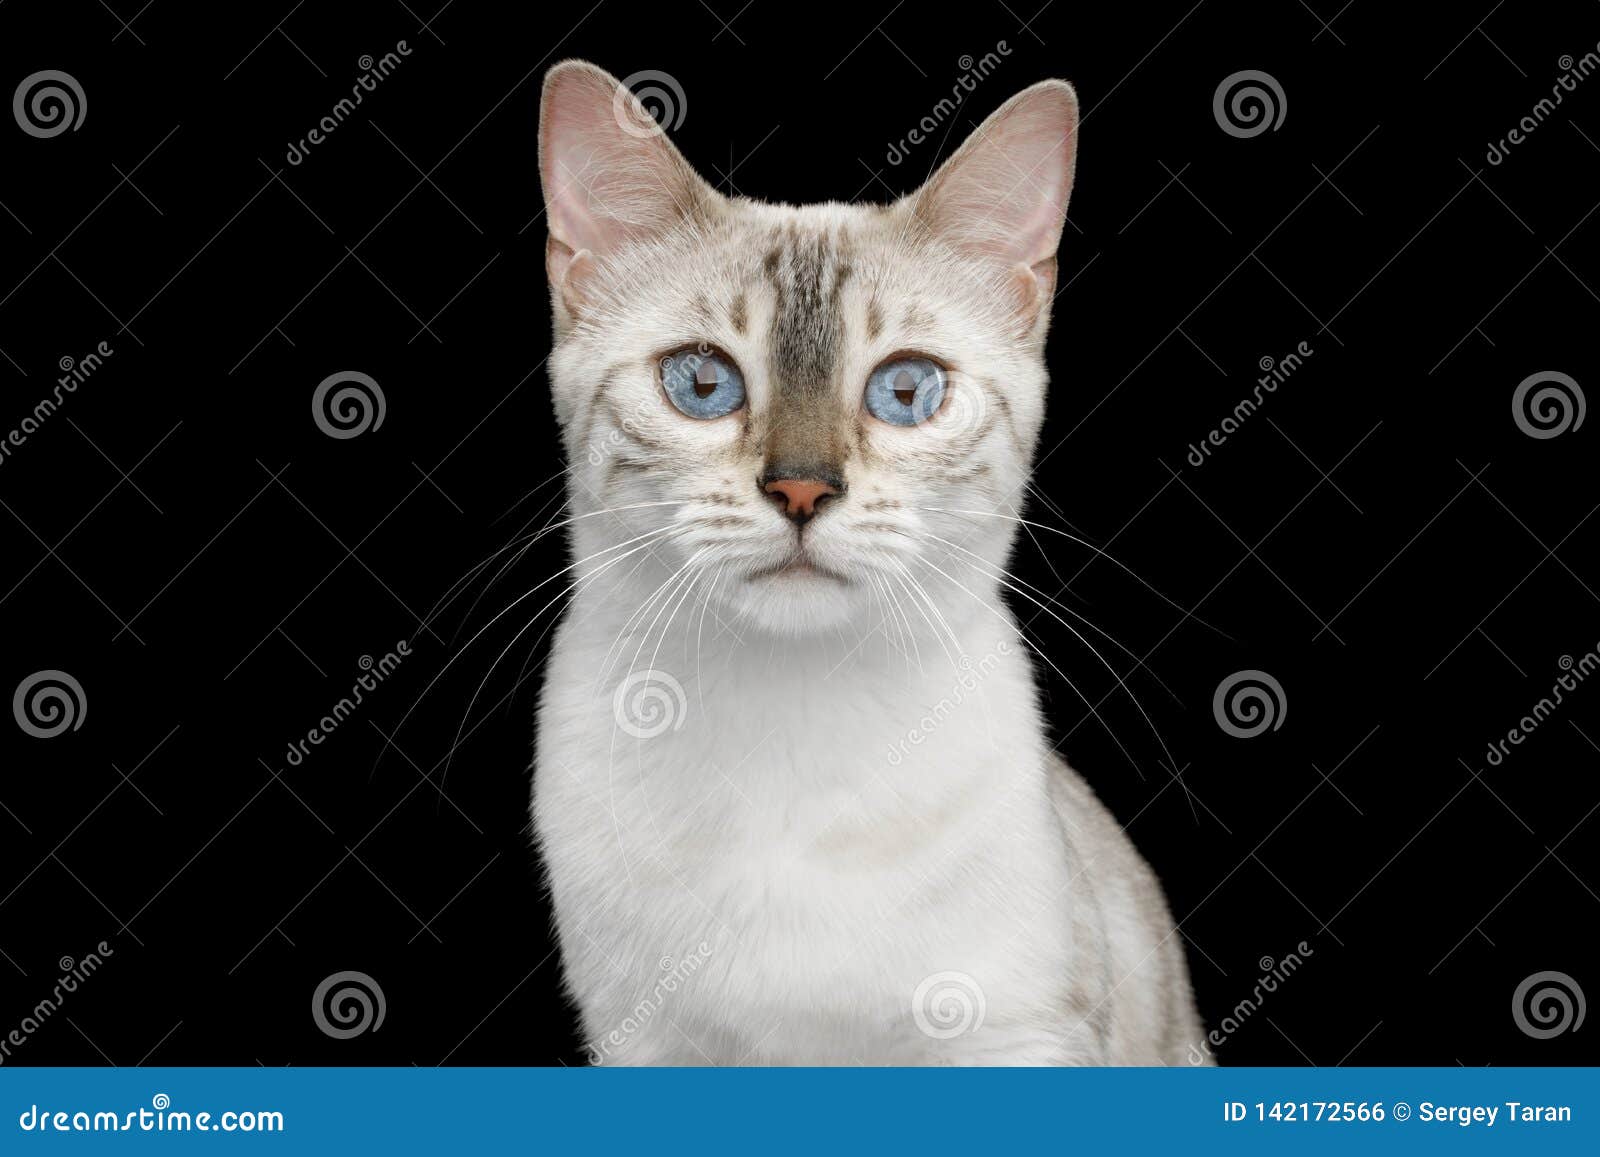 Snow White Bengal Cat Isolated On Black Background Stock Photo Image Of Alone Black 142172566